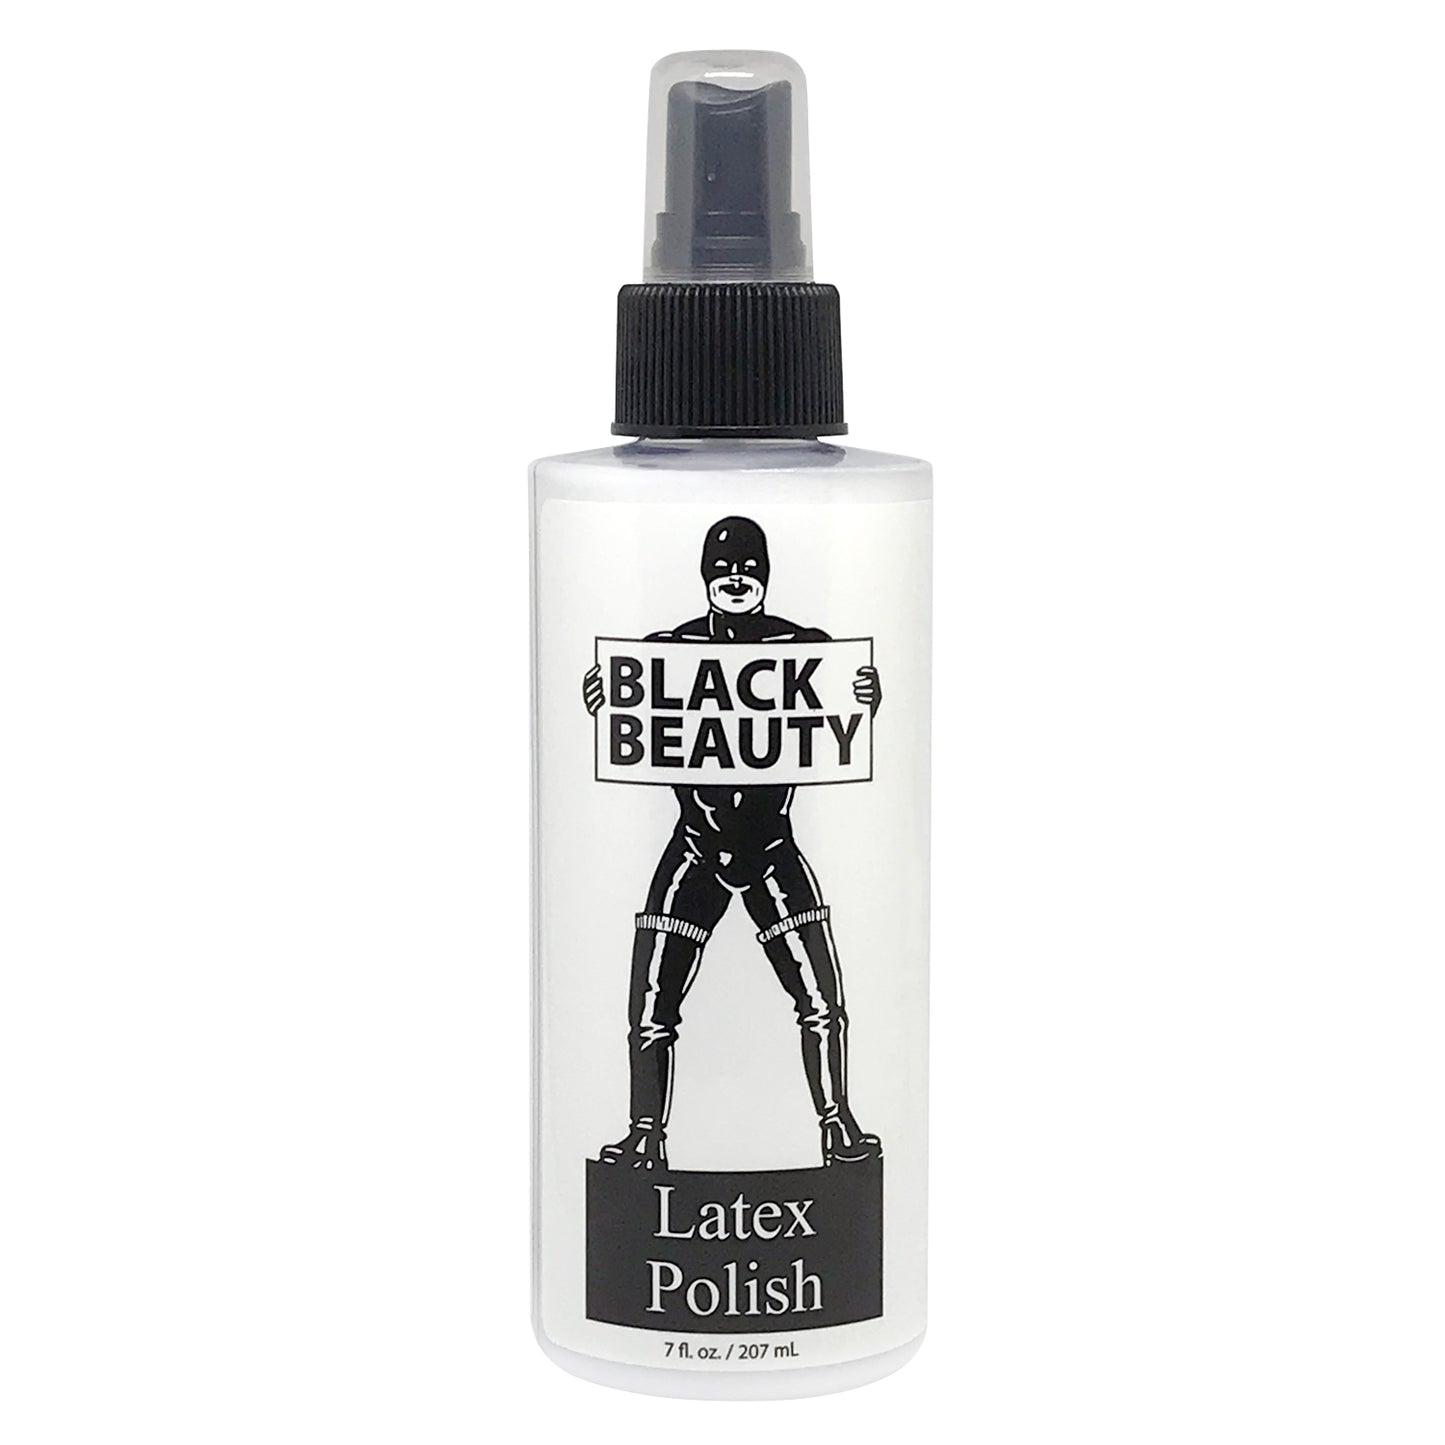 Black Beauty Latex Polish Spray Bottle - 8oz/236ml